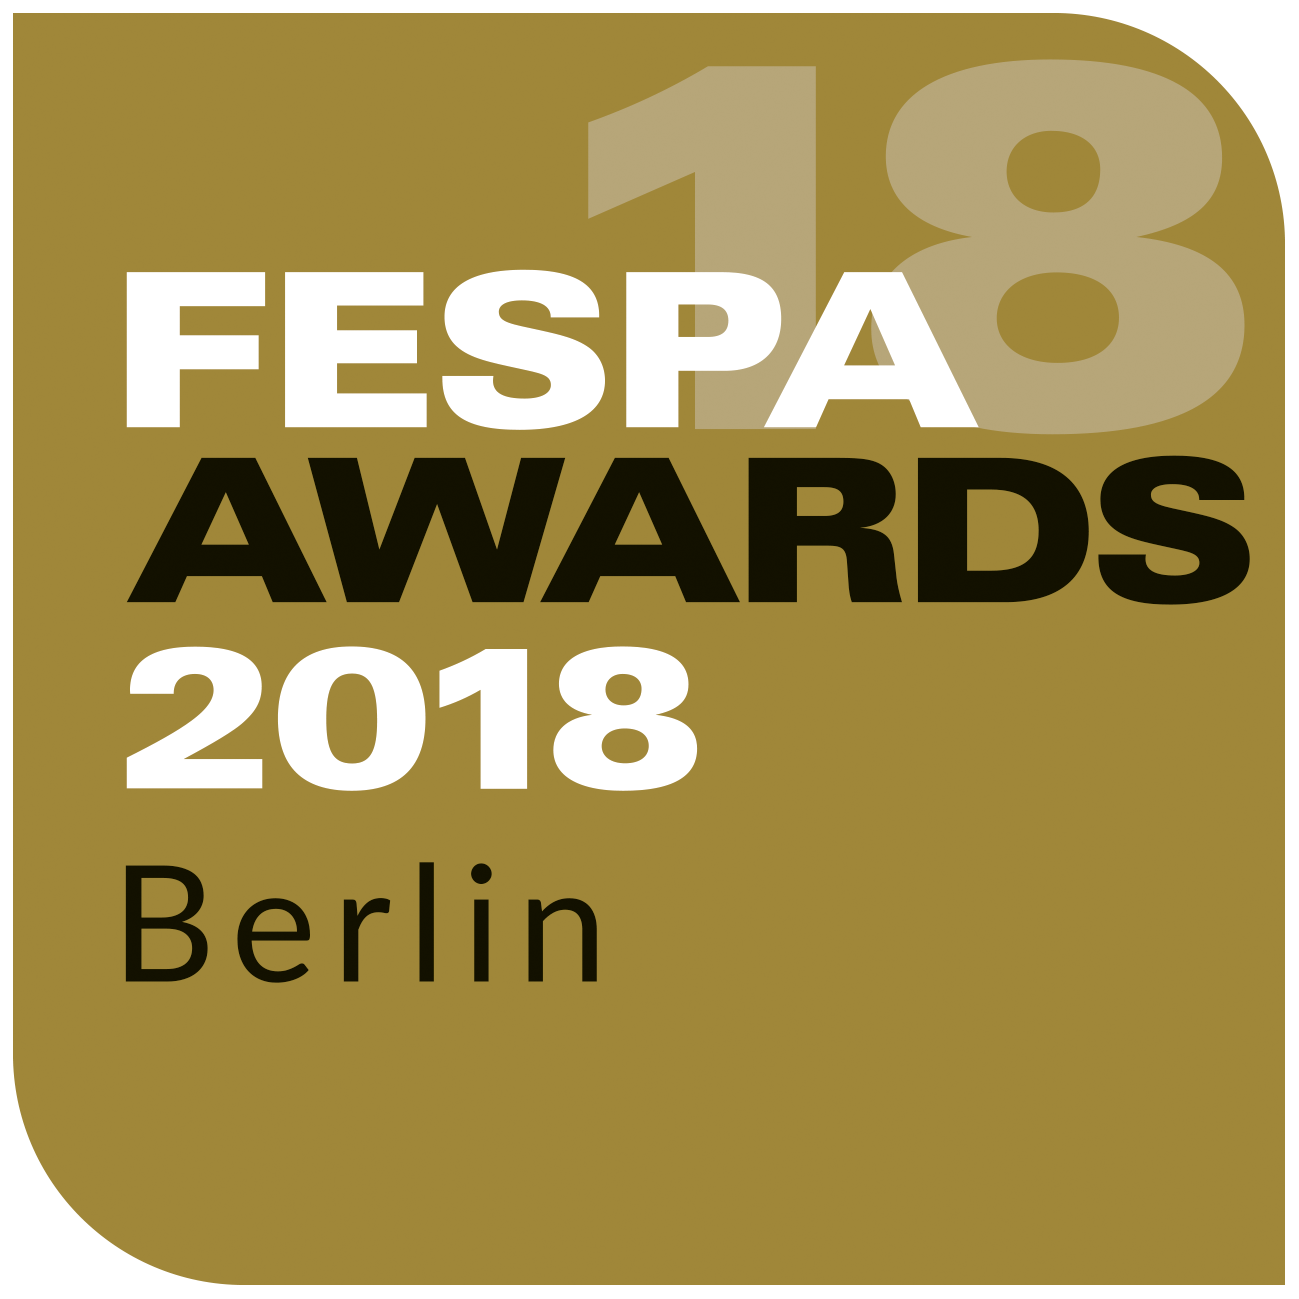 FESPA AWARDS 2018